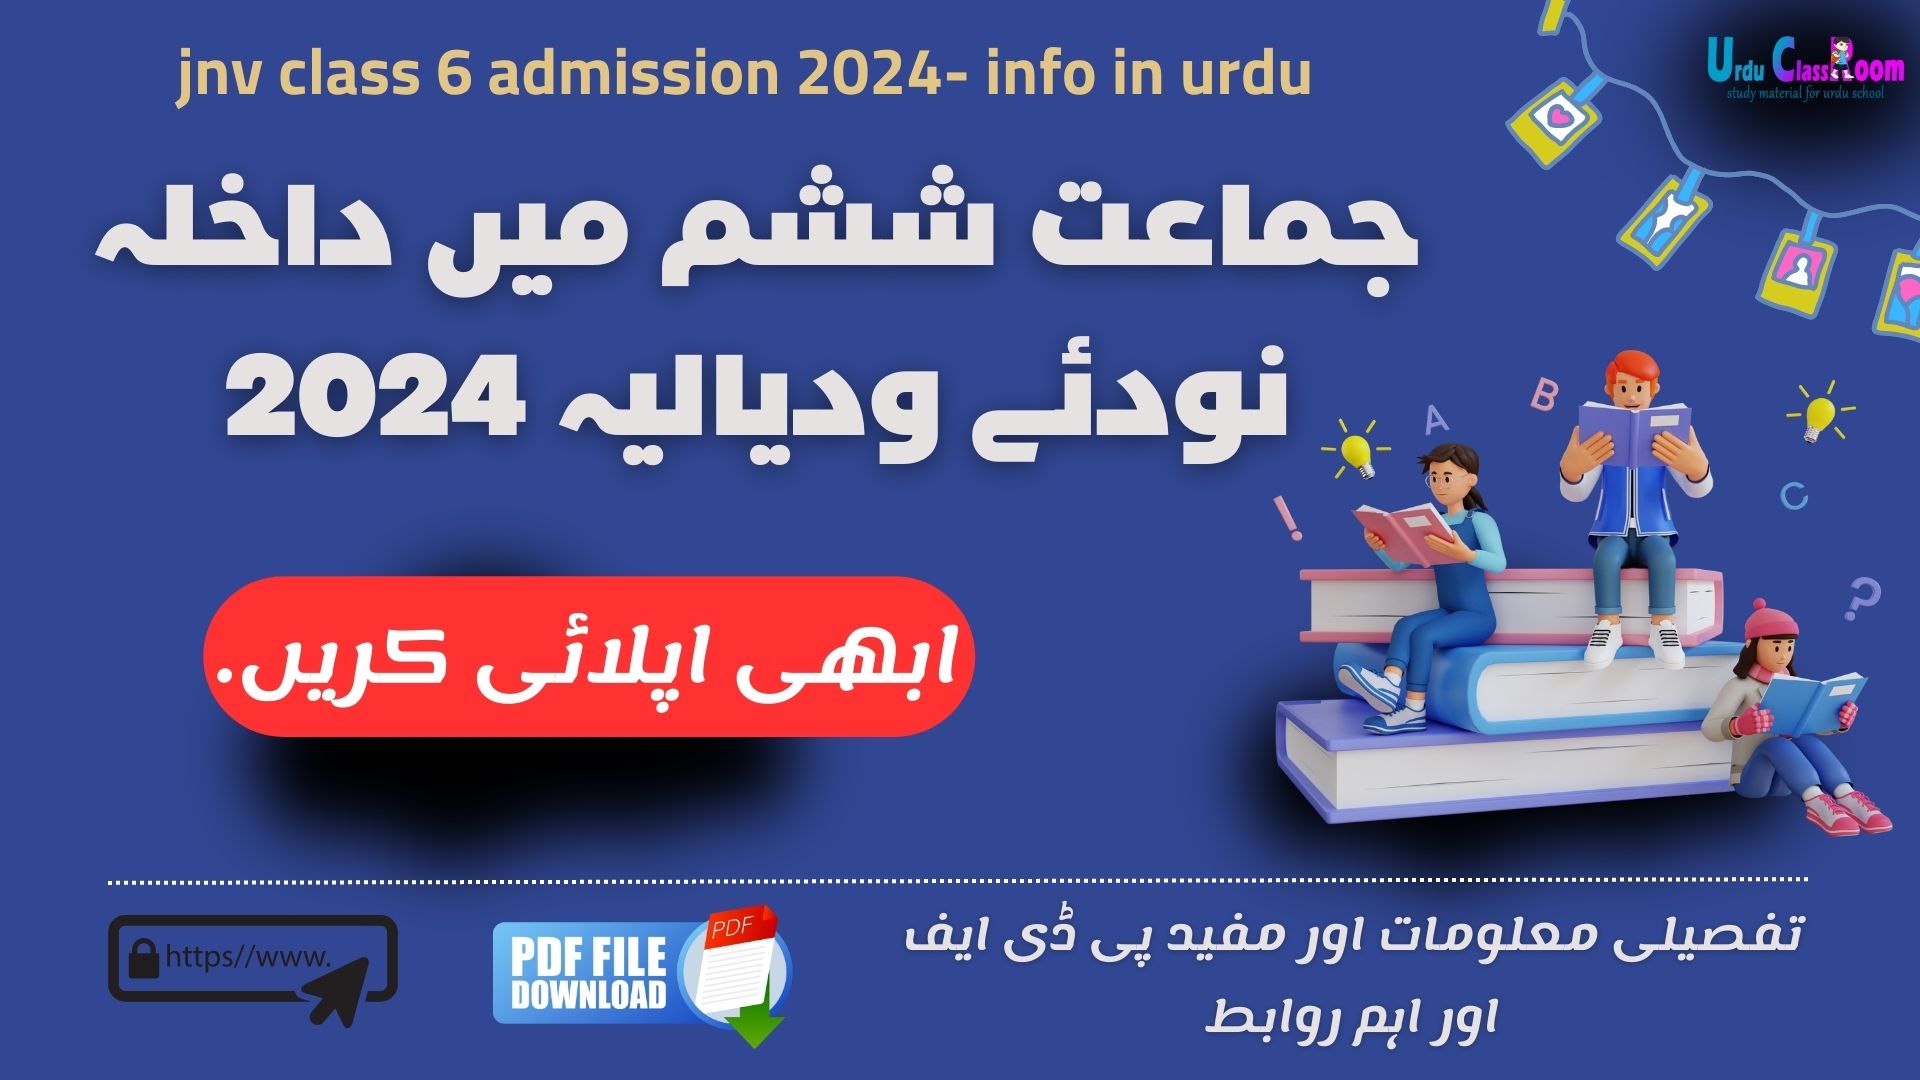 jnv class 6 admission 2024 apply now info in urdu